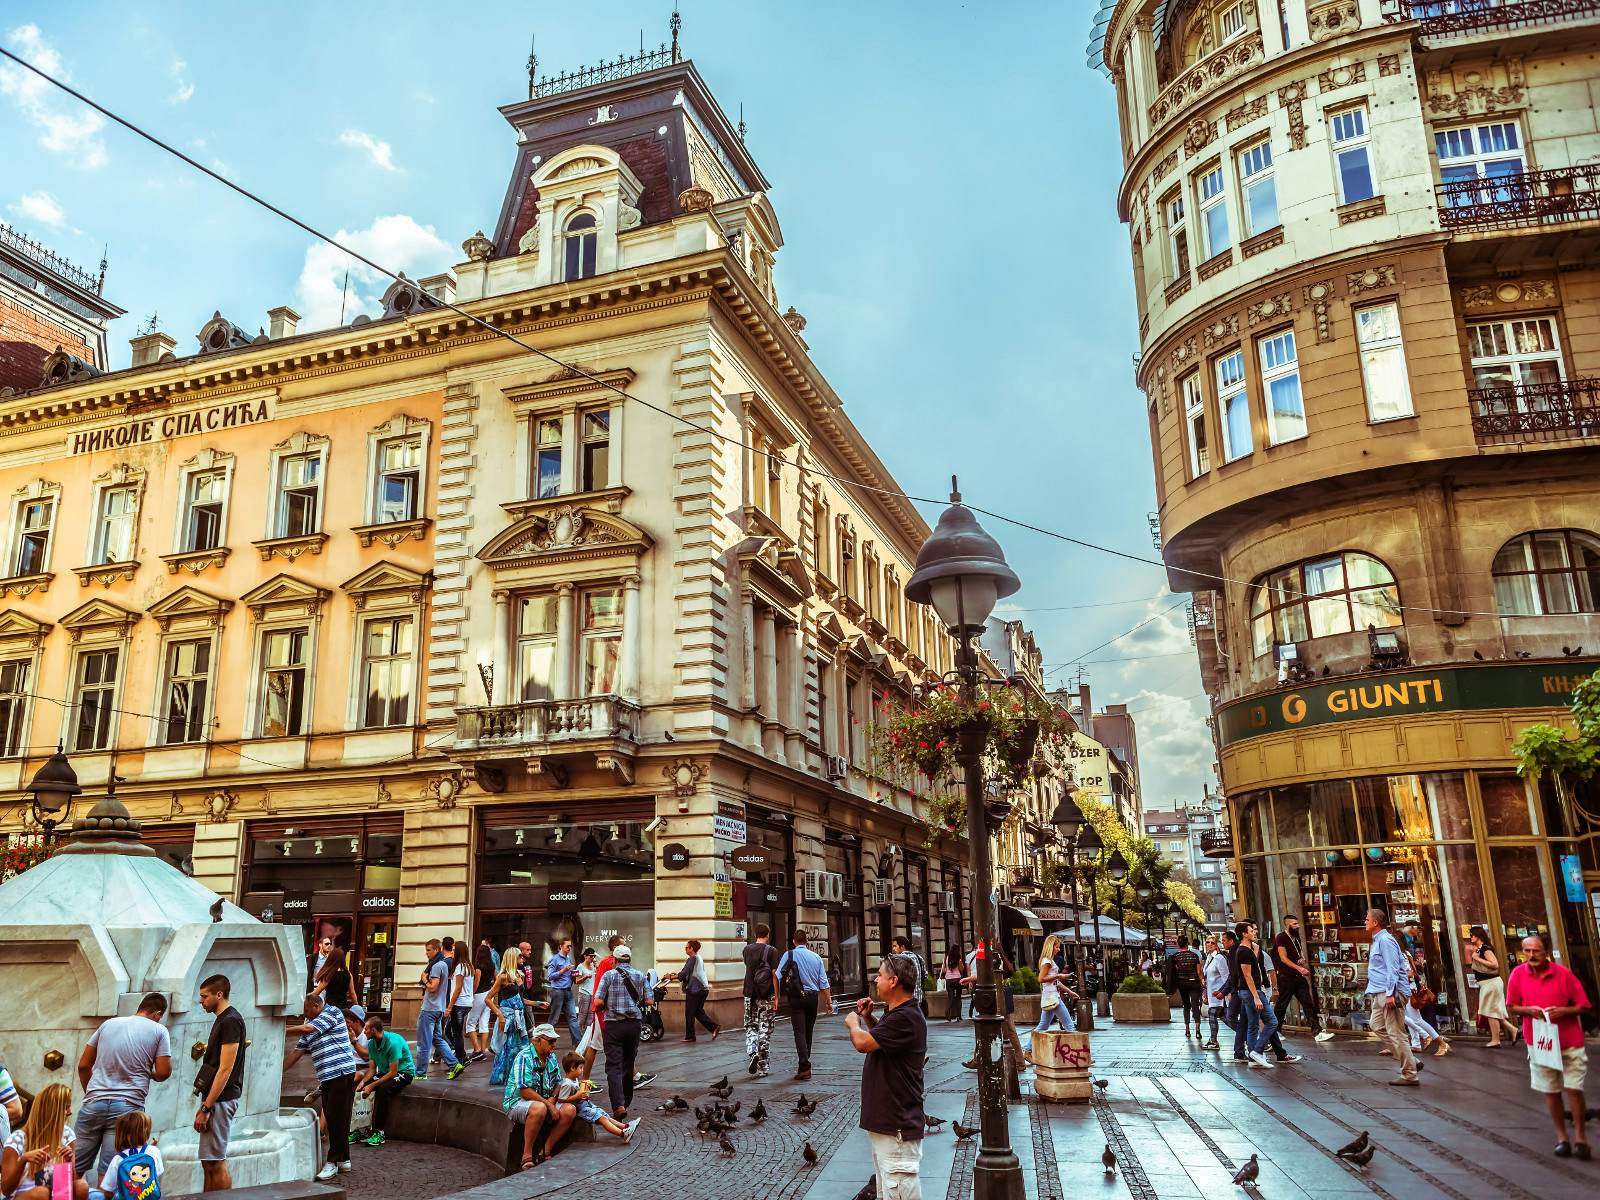 Belgrade boroughs: a tour of the top neighbourhoods - Lonely Planet